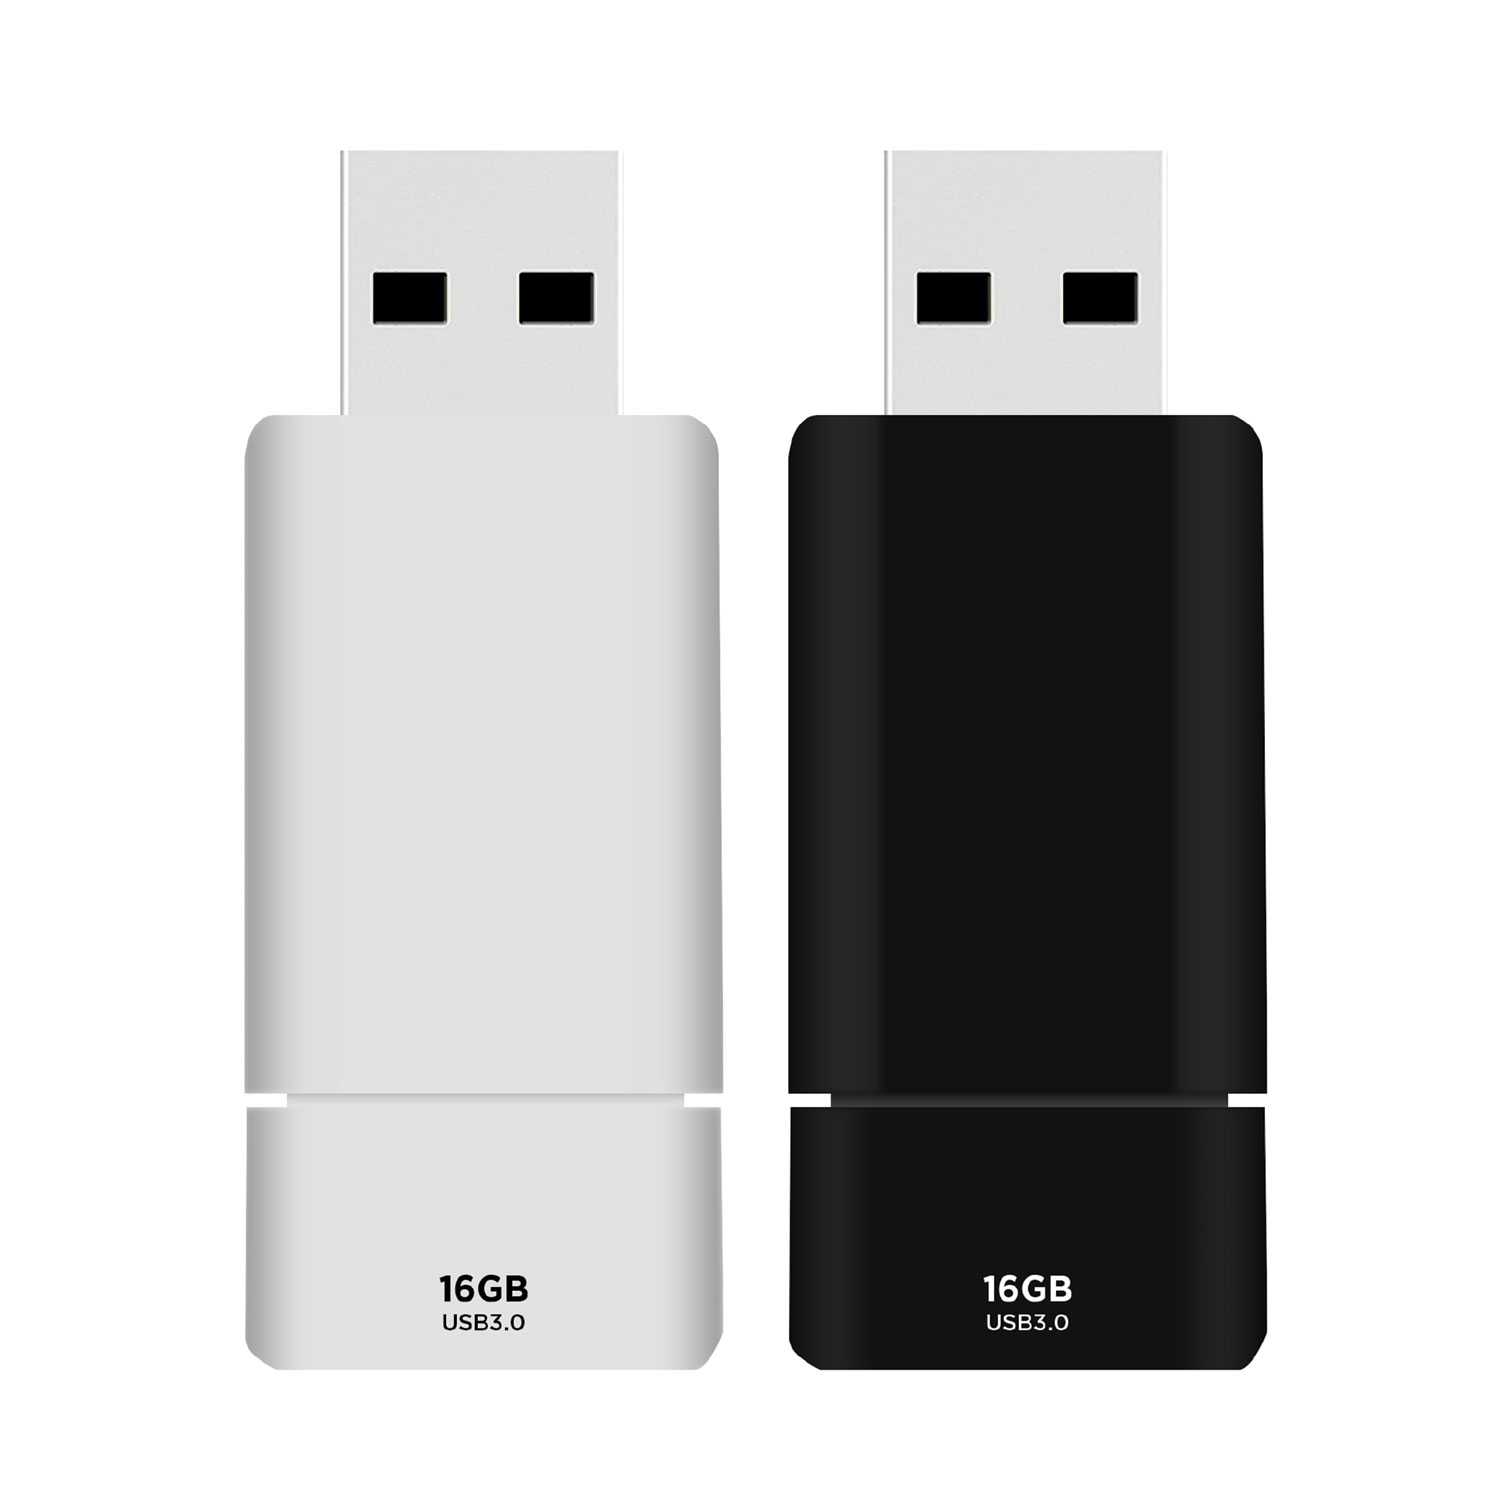  Gigastone TE-U316GBX2-R USB 3.0 Flash Drive, 16 GB, 2 Assorted Colors (GGS24387006) 